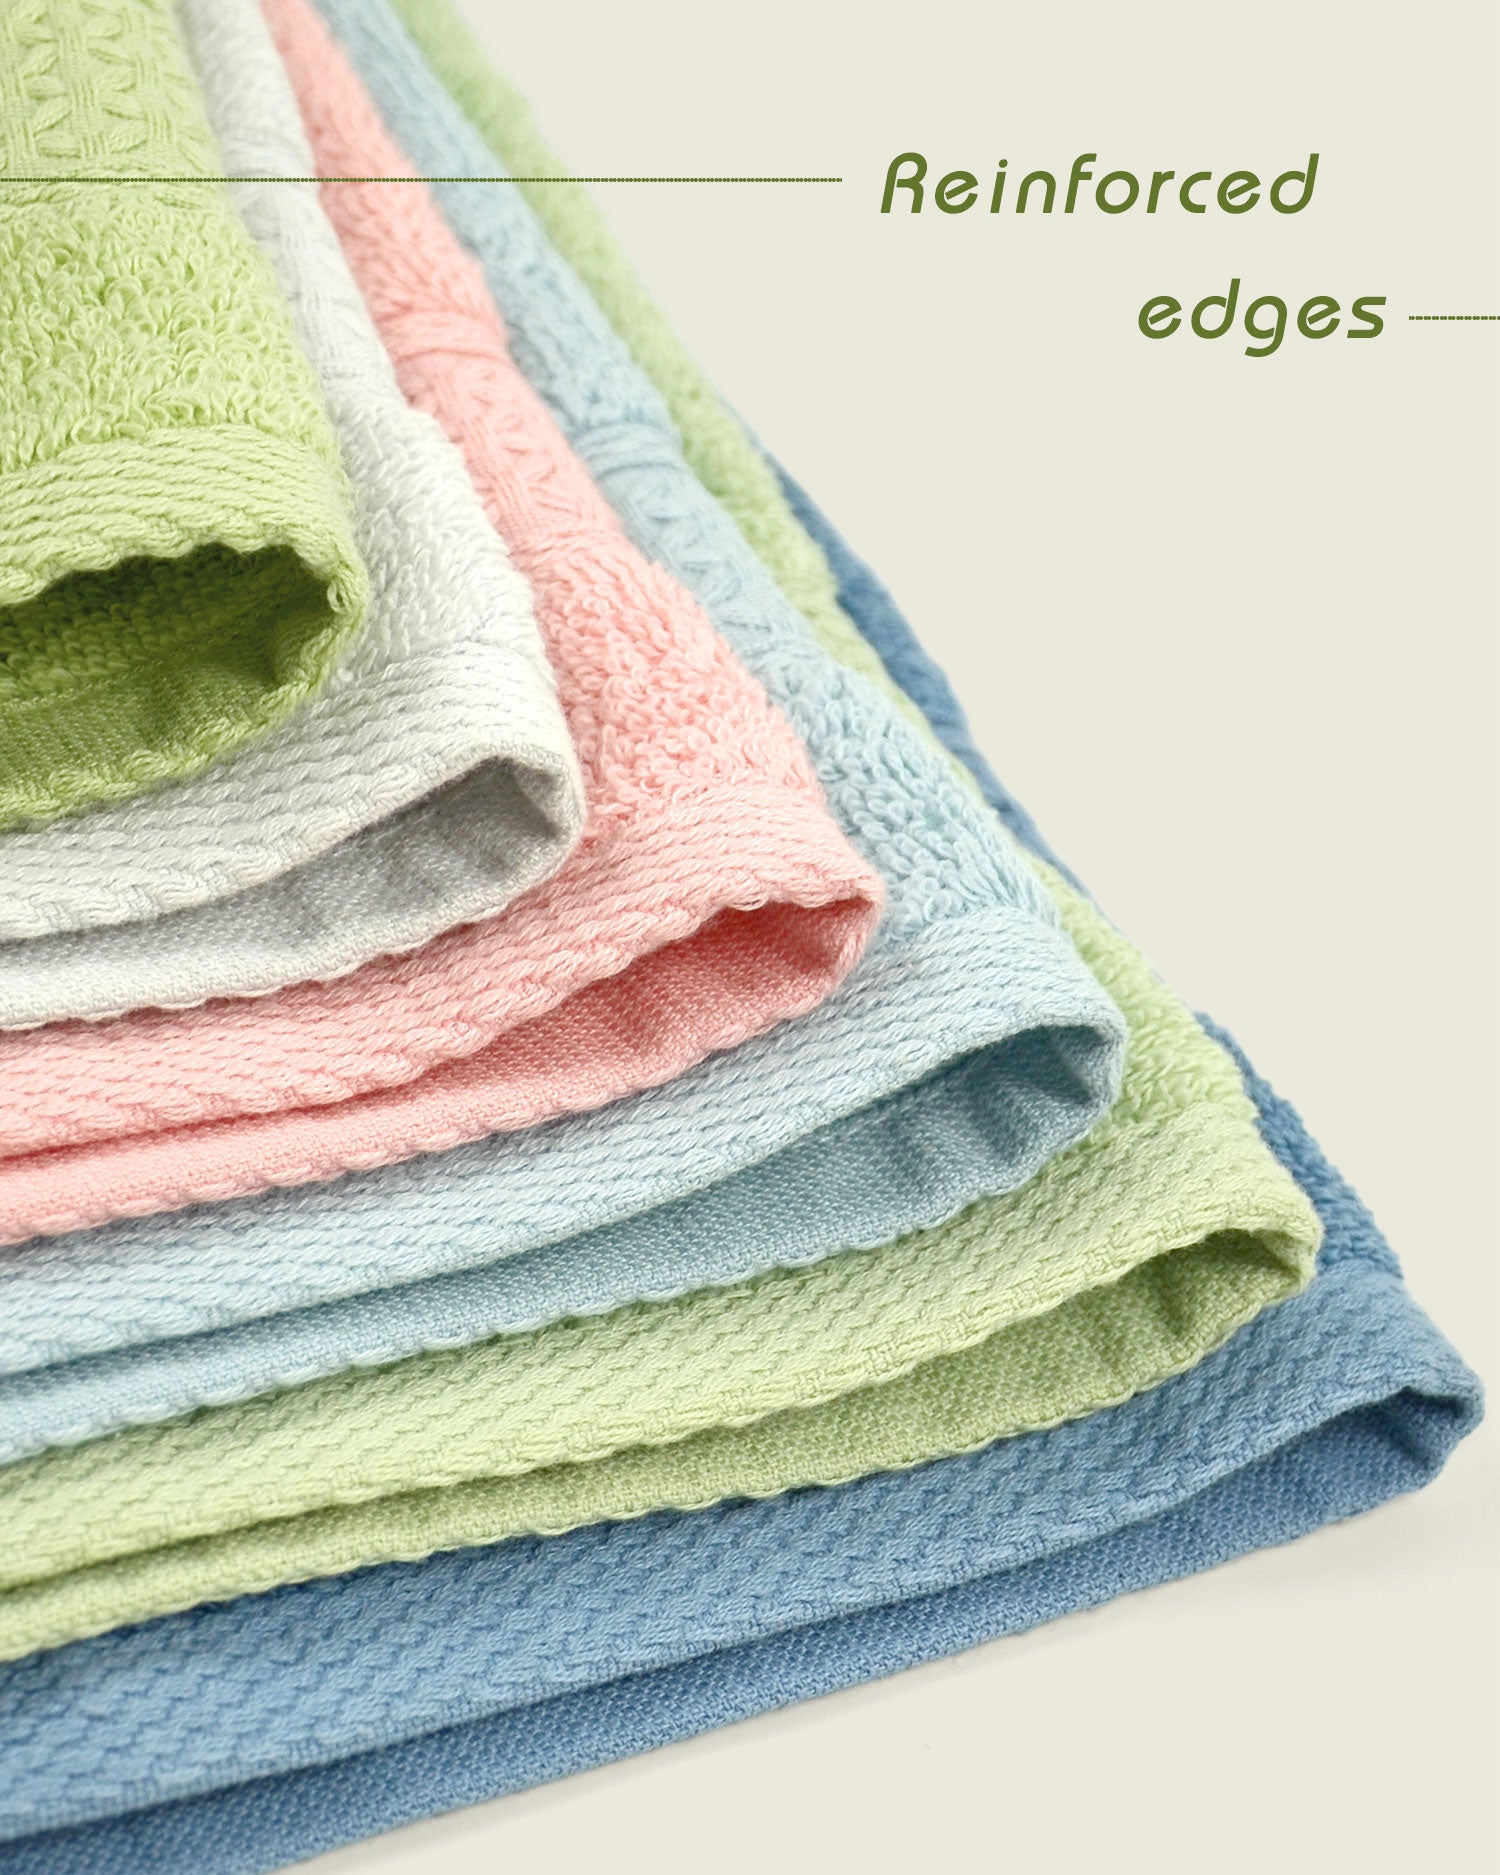 Cleanbear Face-Cloth Washcloths Set,100% Cotton, High Absorbent, 6-Pack 6  Colors, Size13 x13-deep Color